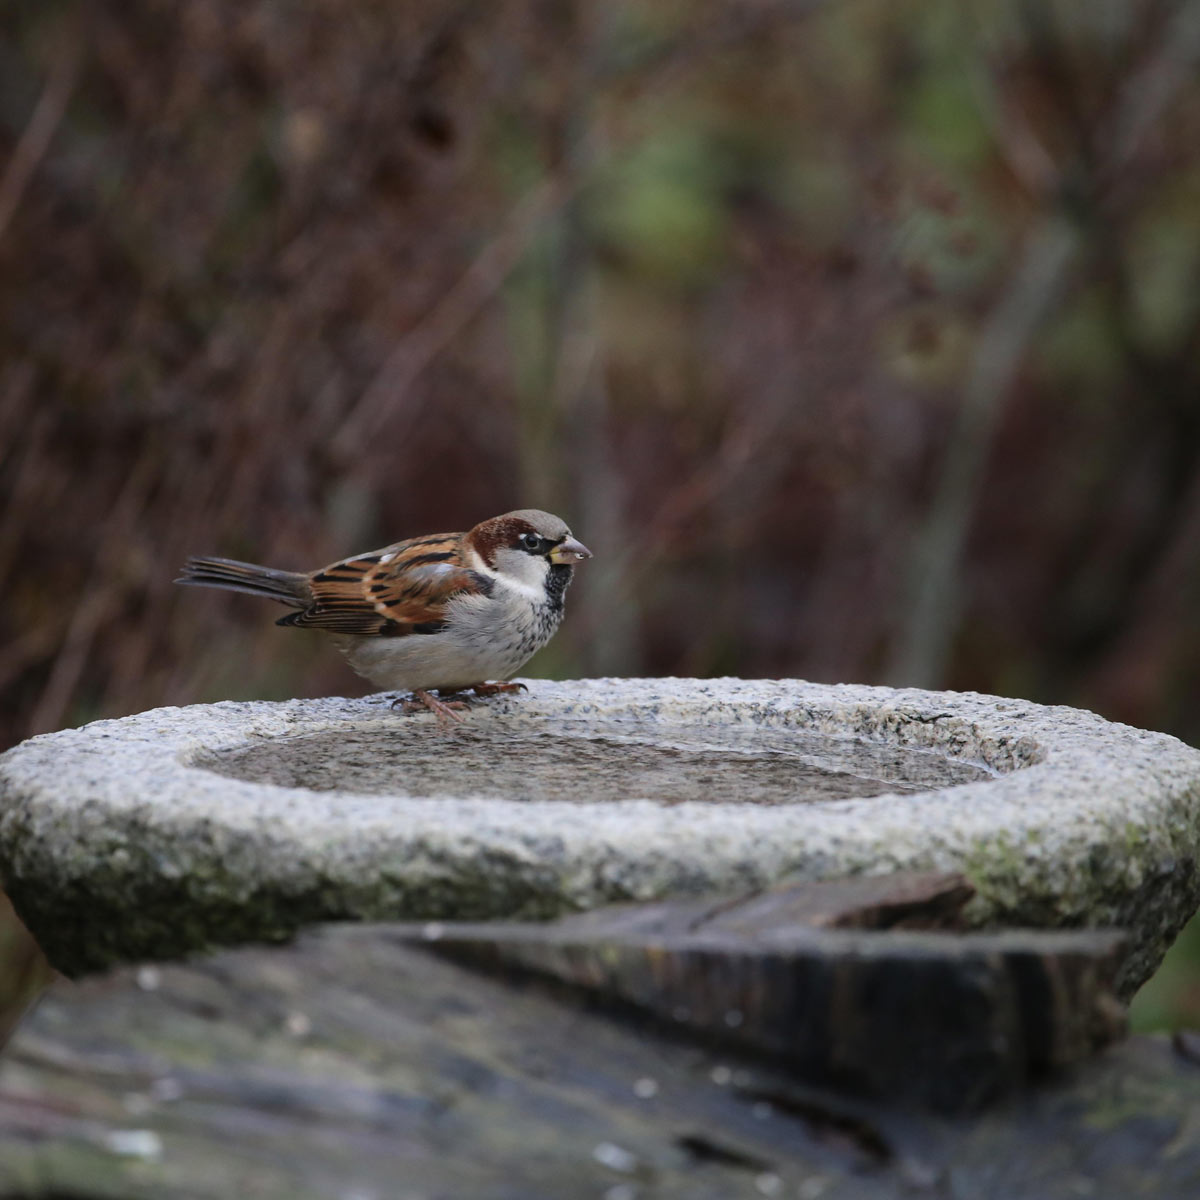 Birdbath with Sparrow